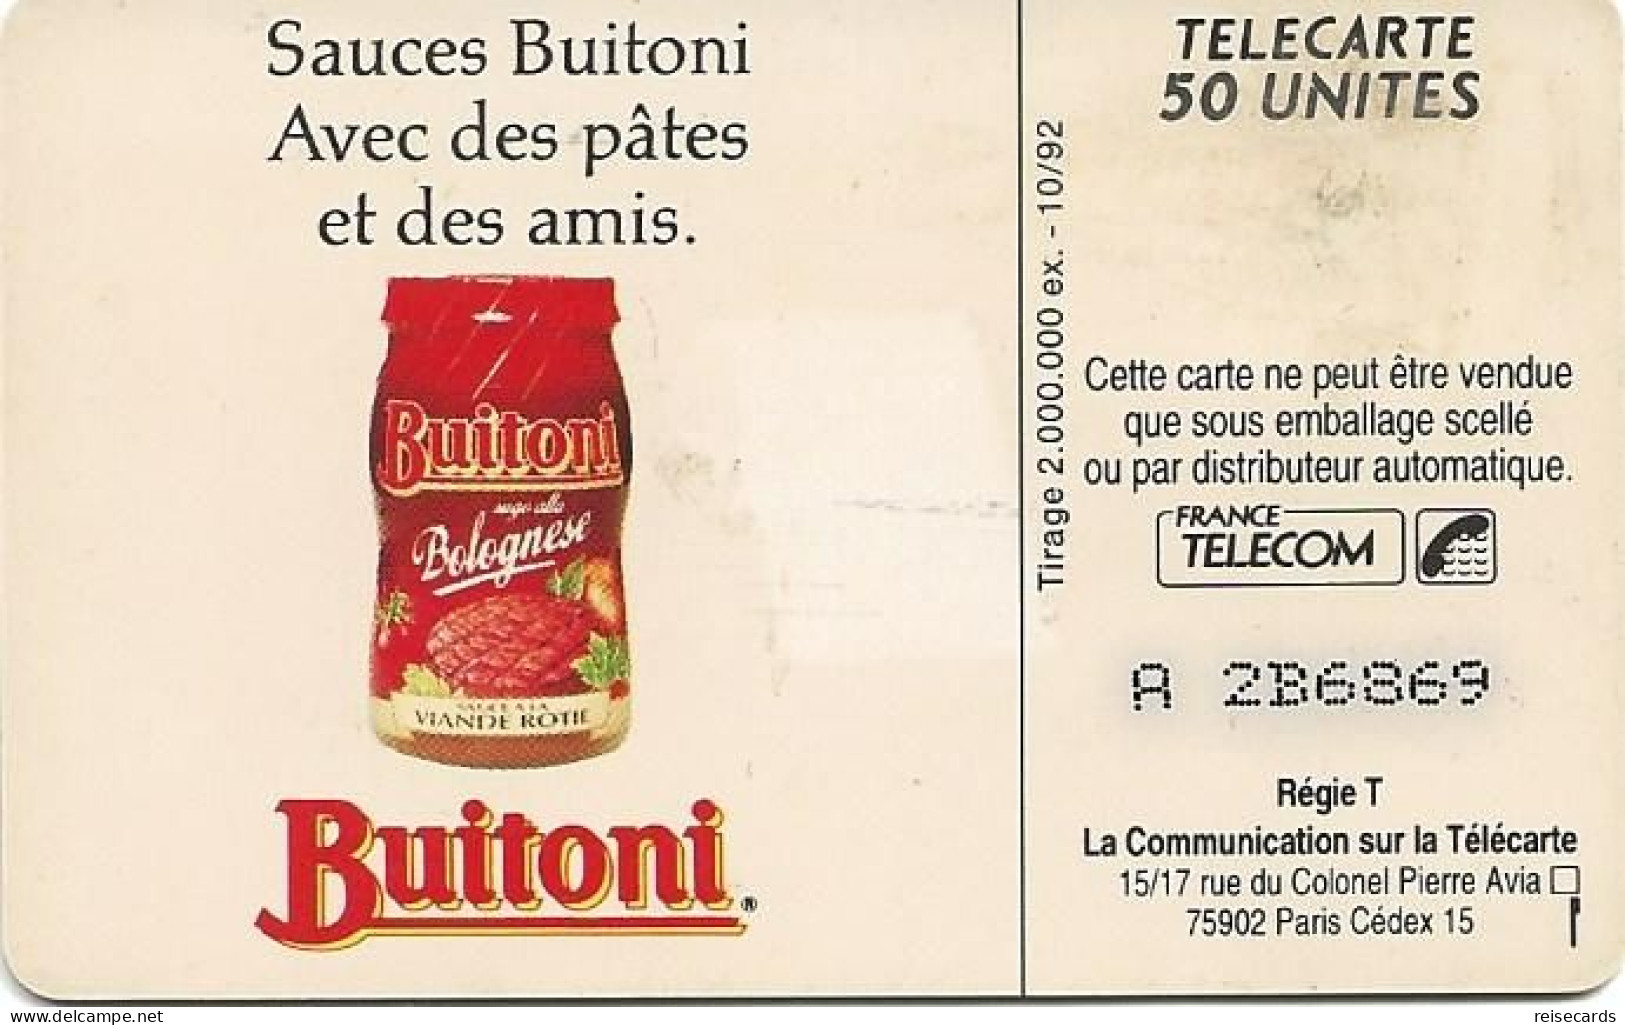 France: France Telecom 10/92 F296A Buitoni - 1992